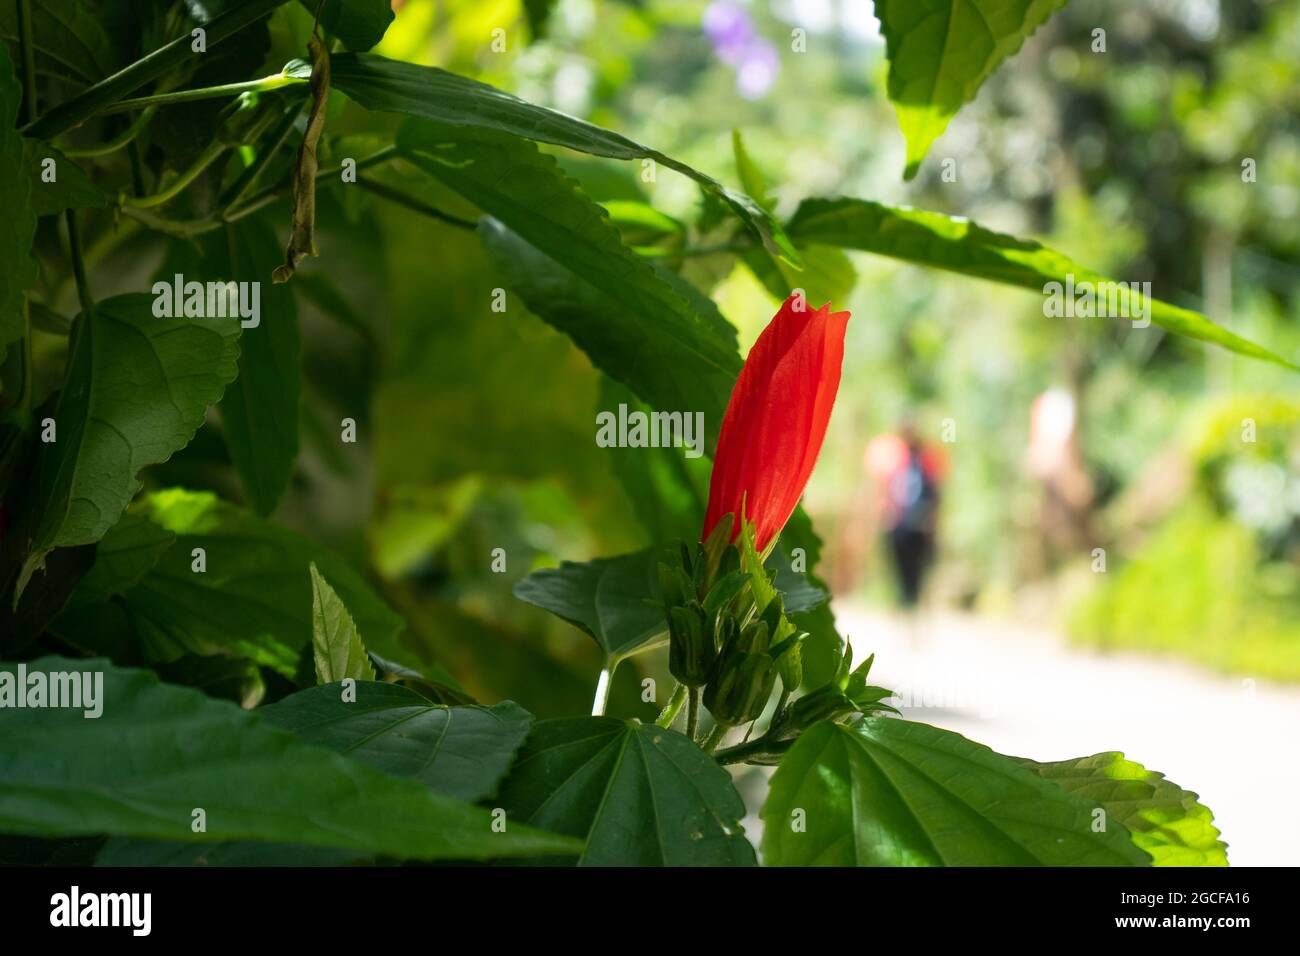 Red Closed Flower Knows as Turkcap, Turk's turban, Wax Mallow, Ladies Teardrop and Scotchman's purse (Malvaviscus arboreus) in the Garden, in a Sunny Stock Photo